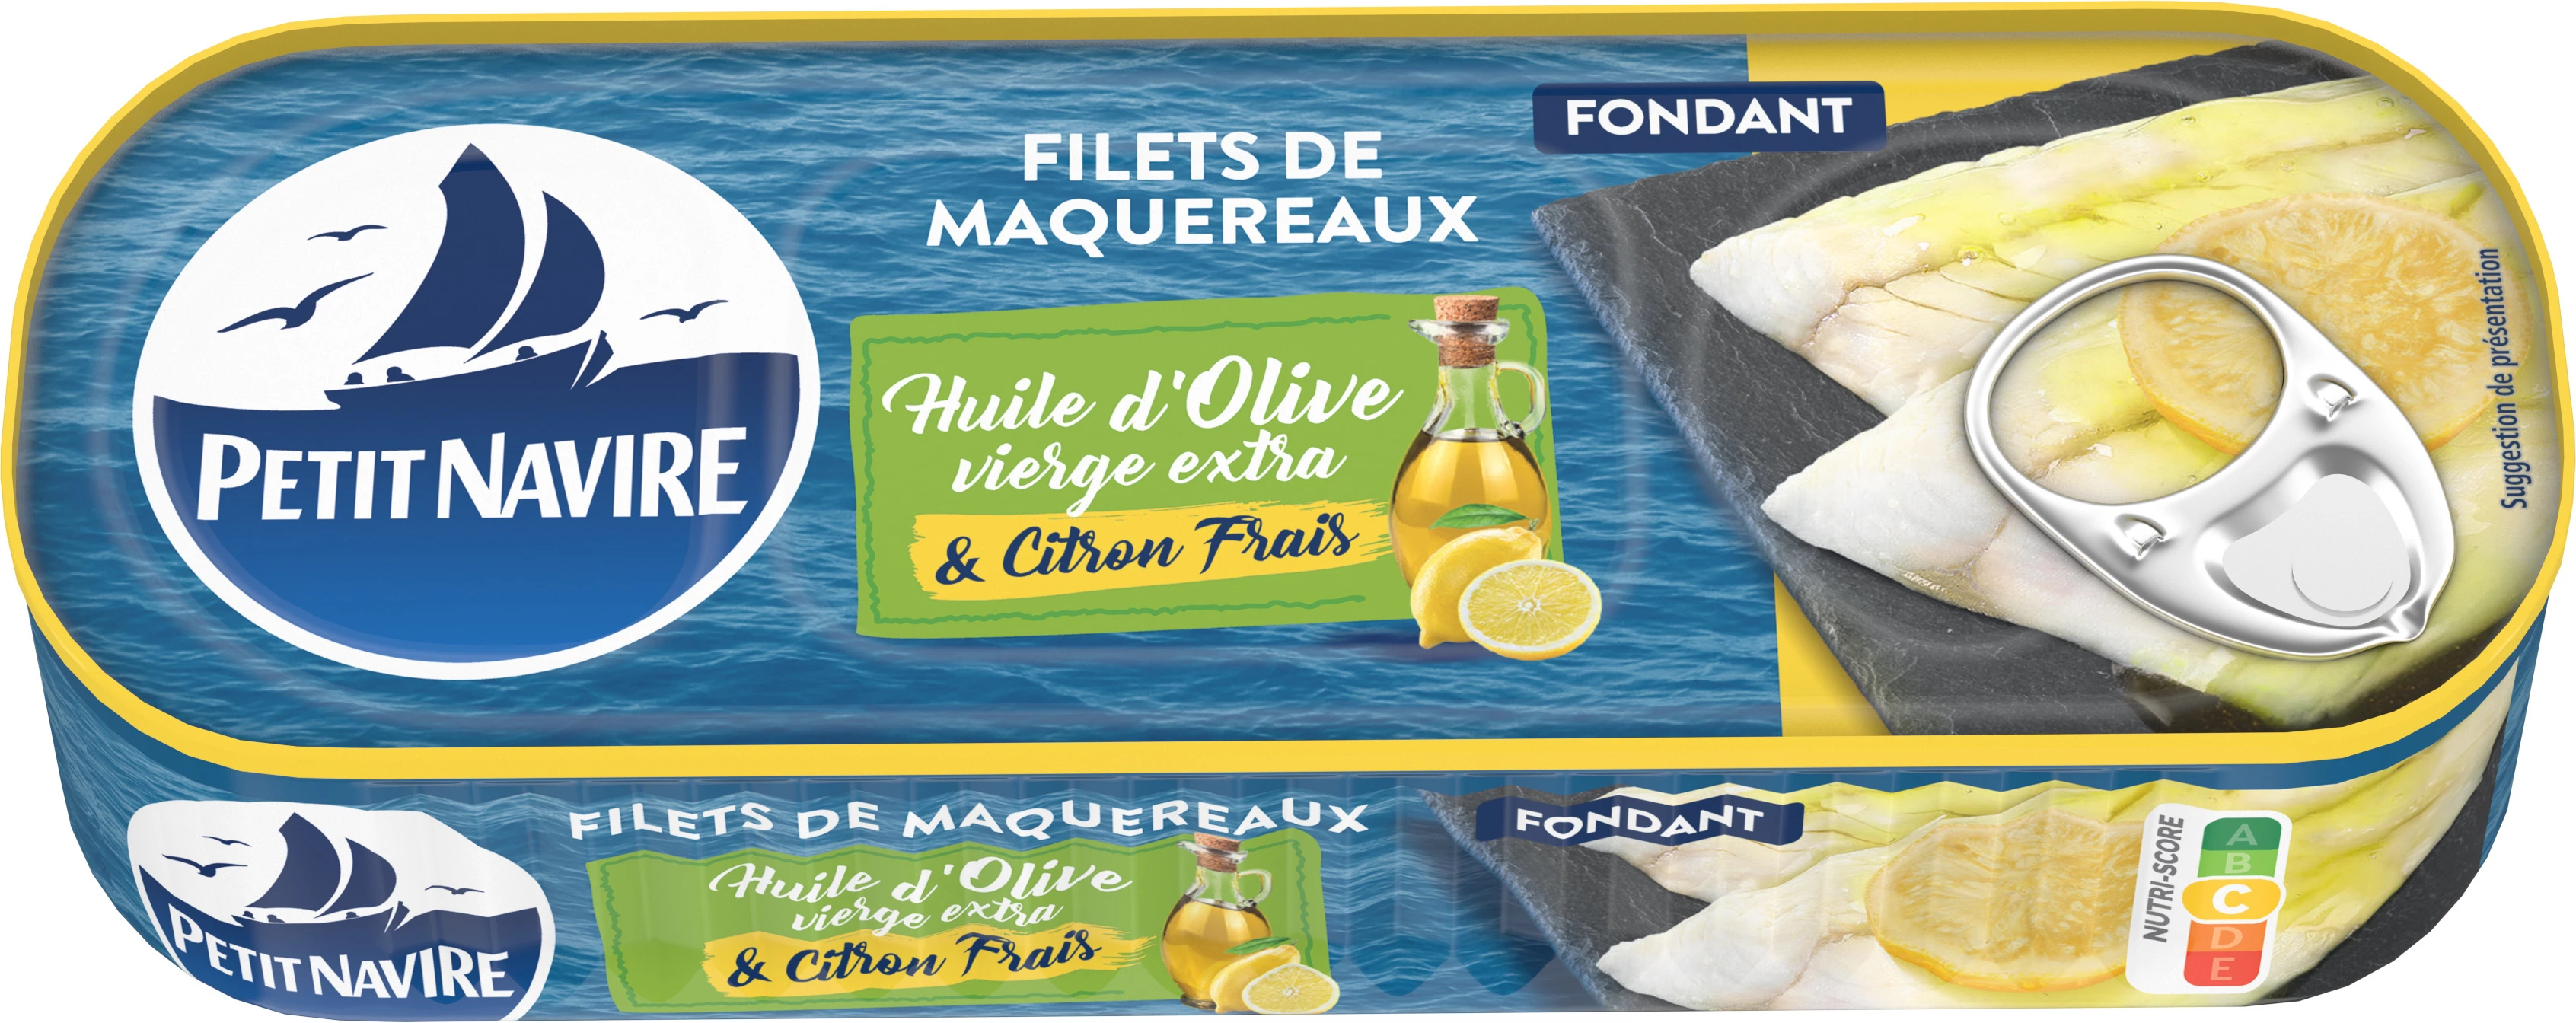 Makreelfilets met olijfolie en verse citroen, 145 g - PATIT NAVIRE